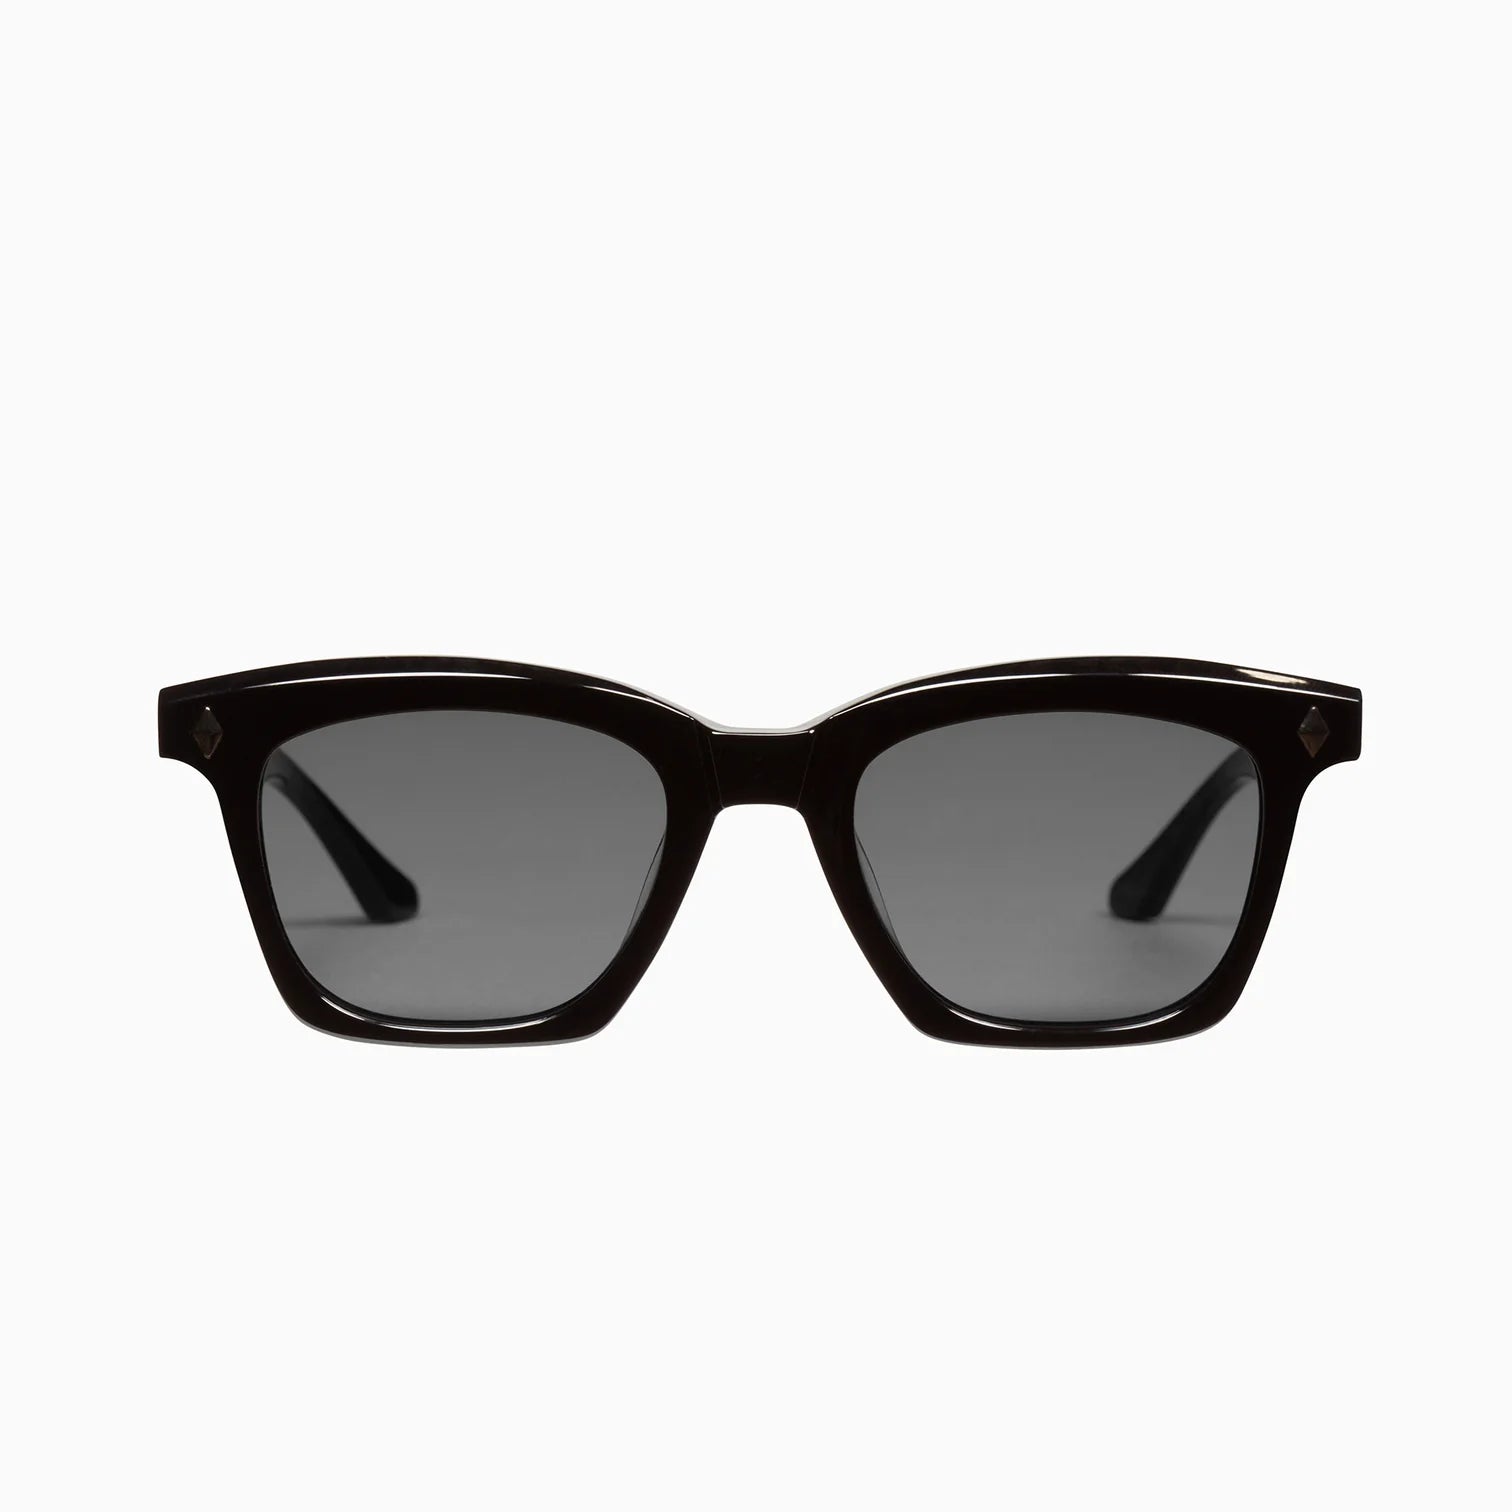 Hutch Sunglasses | Gloss Black with Silver Metal Trim + Black Lens